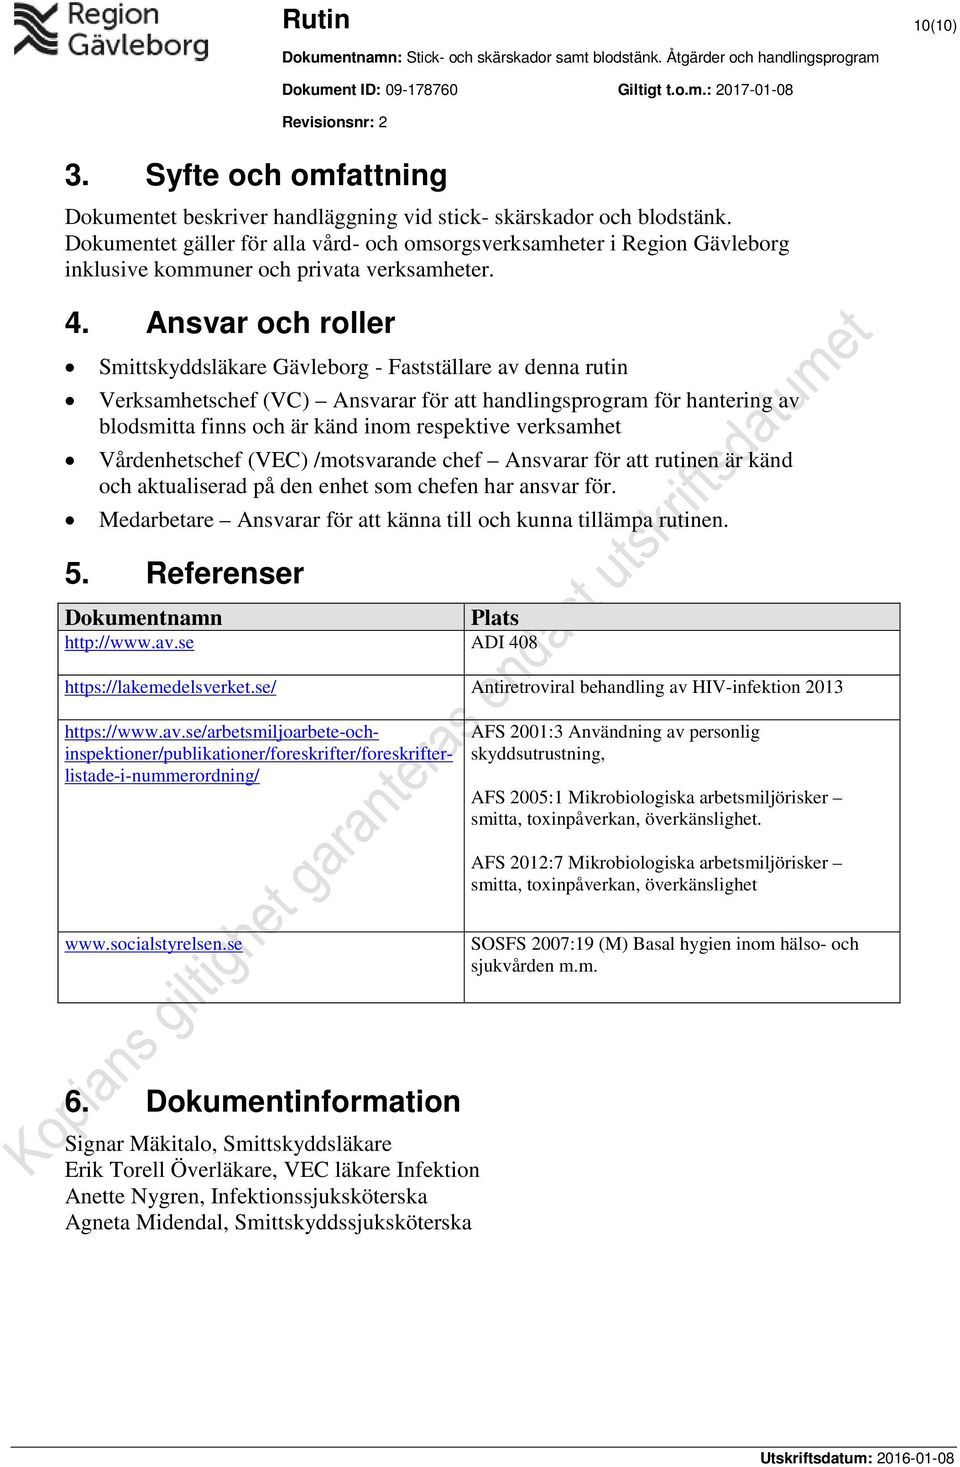 Revisionsnr: 2 Giltigt t.o.m.: - PDF Free Download